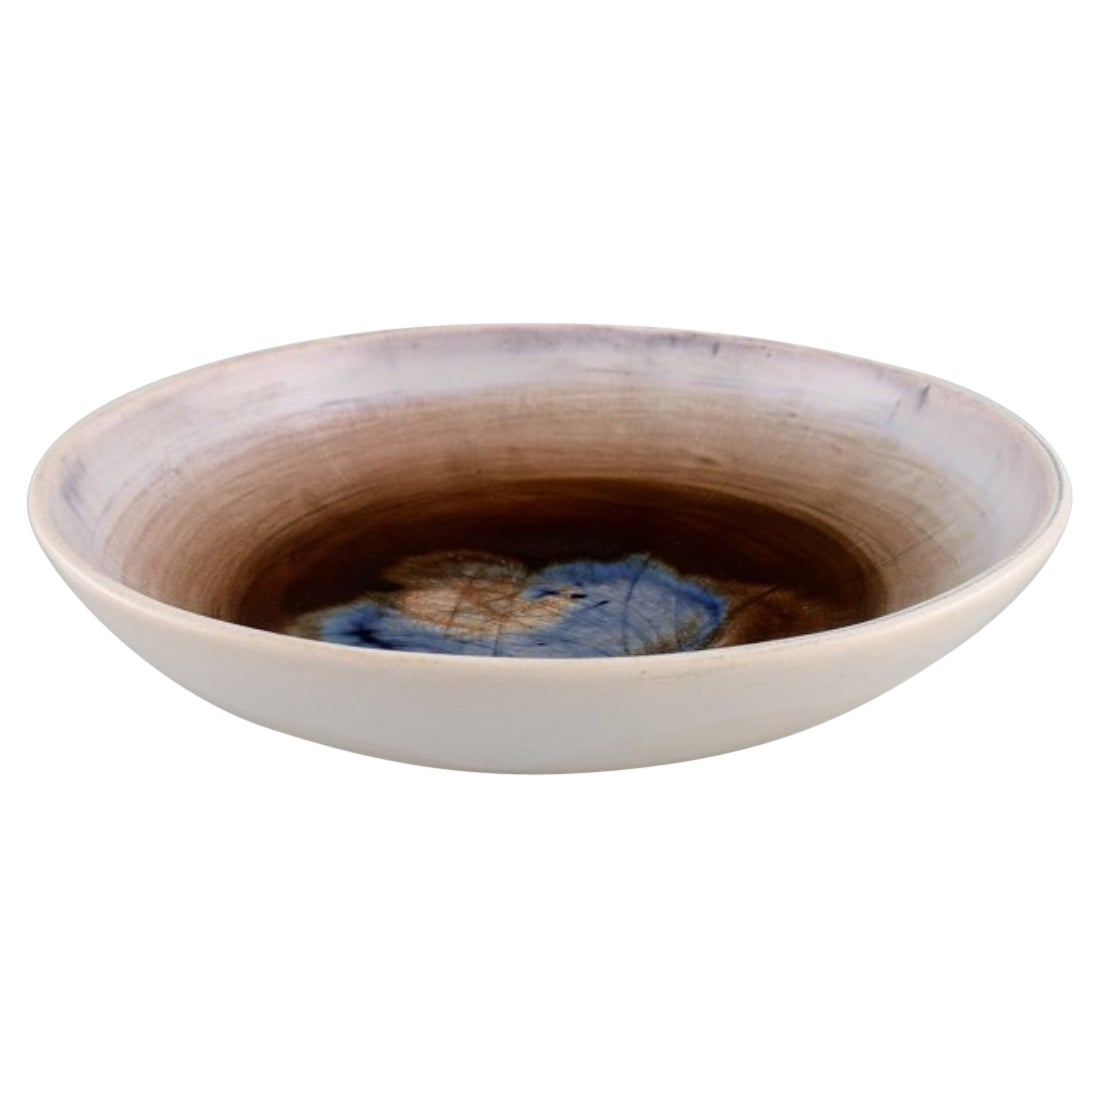 Georges Jouve (1910-1964), France. Unique bowl in glazed stoneware. For Sale